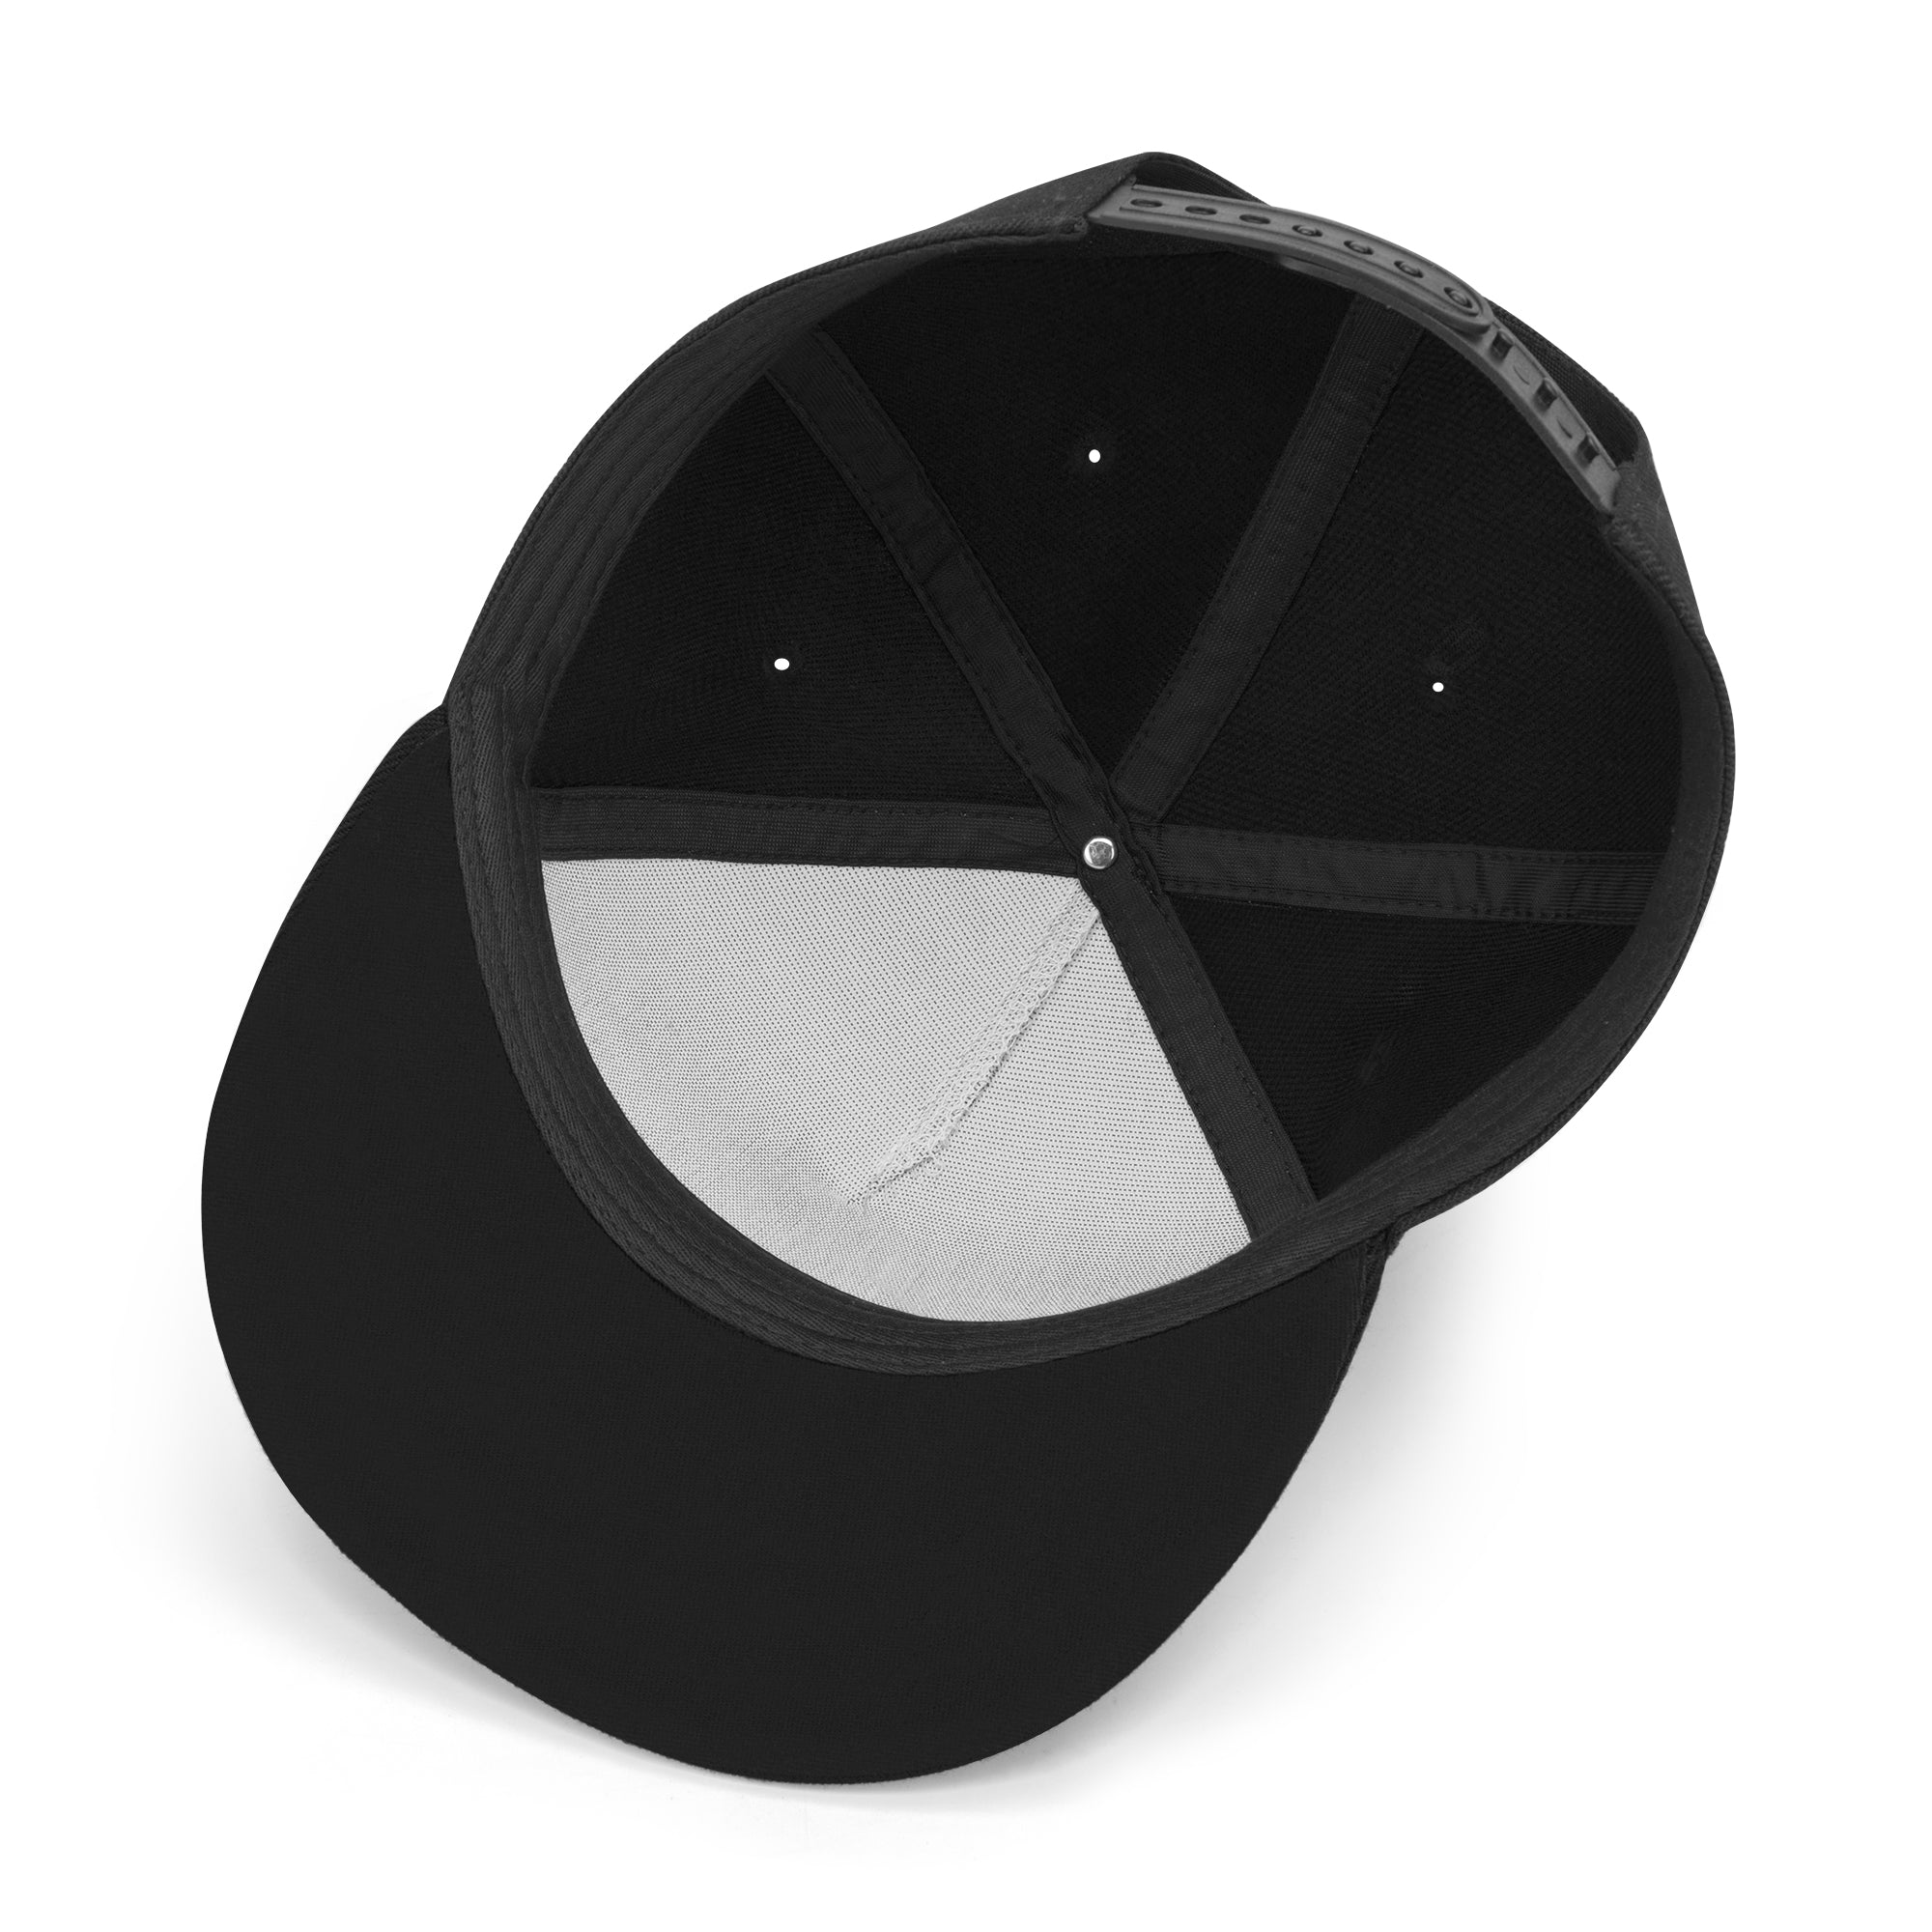 a black and white baseball cap with a black visor